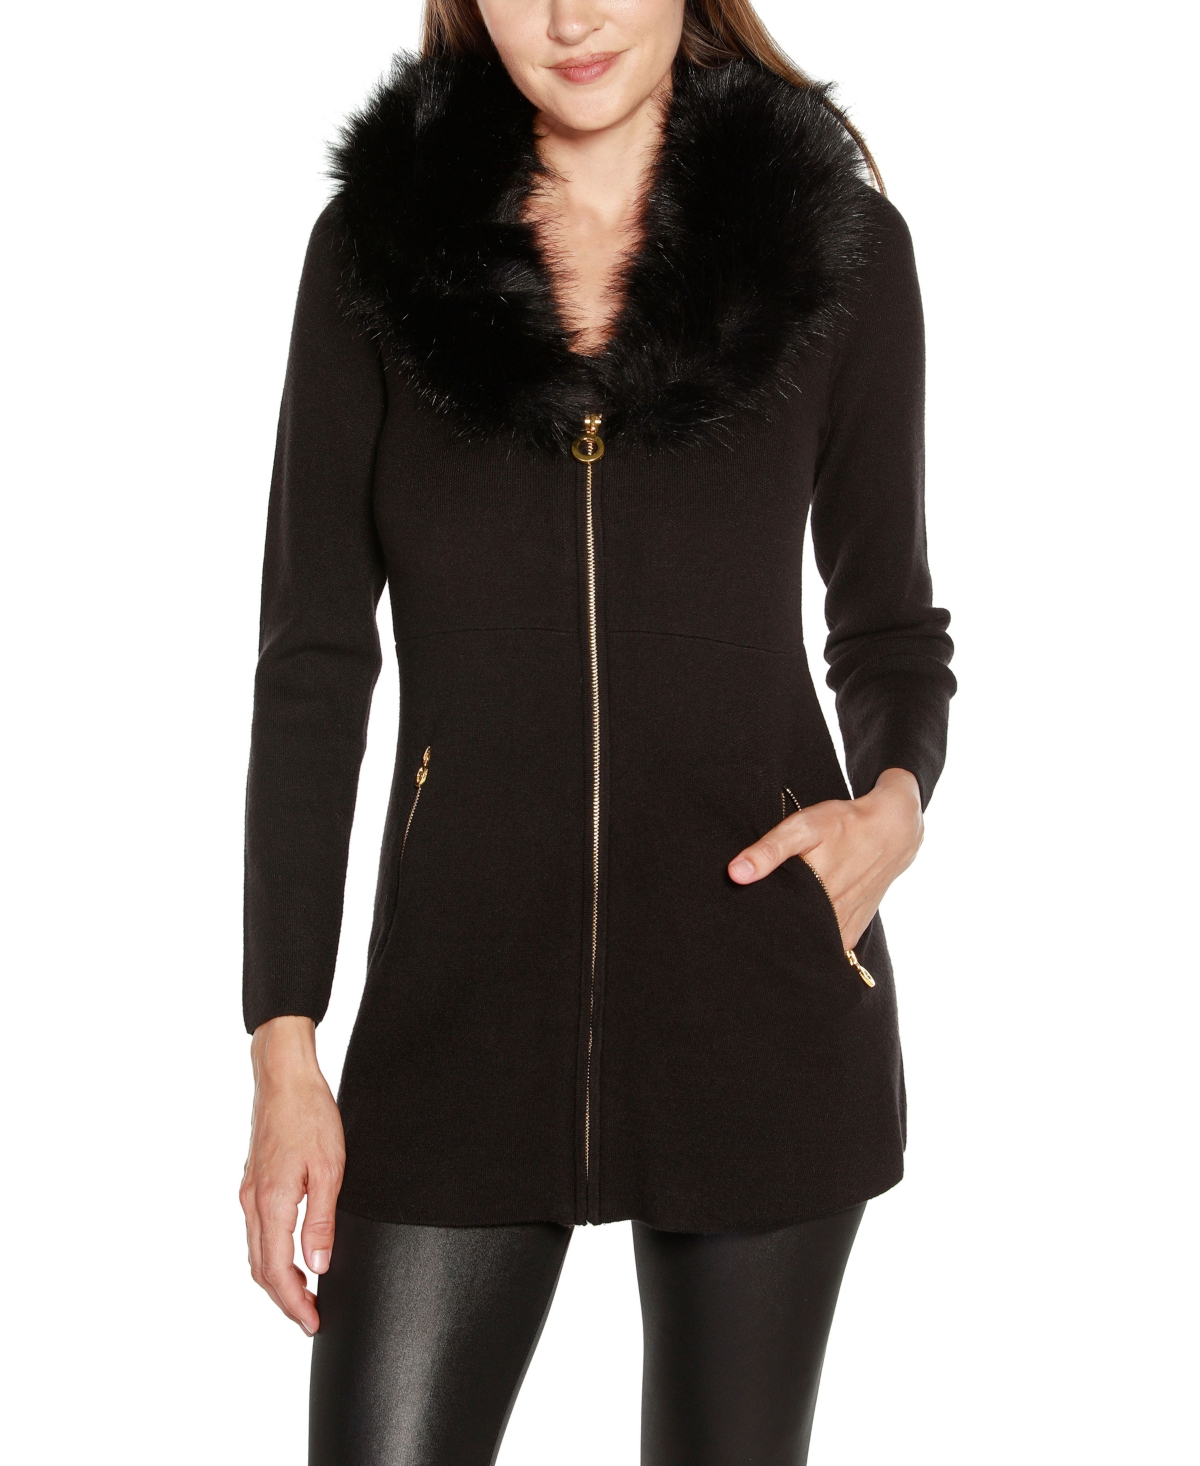 Belldini Black Label Plus Size Faux Fur Collared Cable Cardigan Sweater